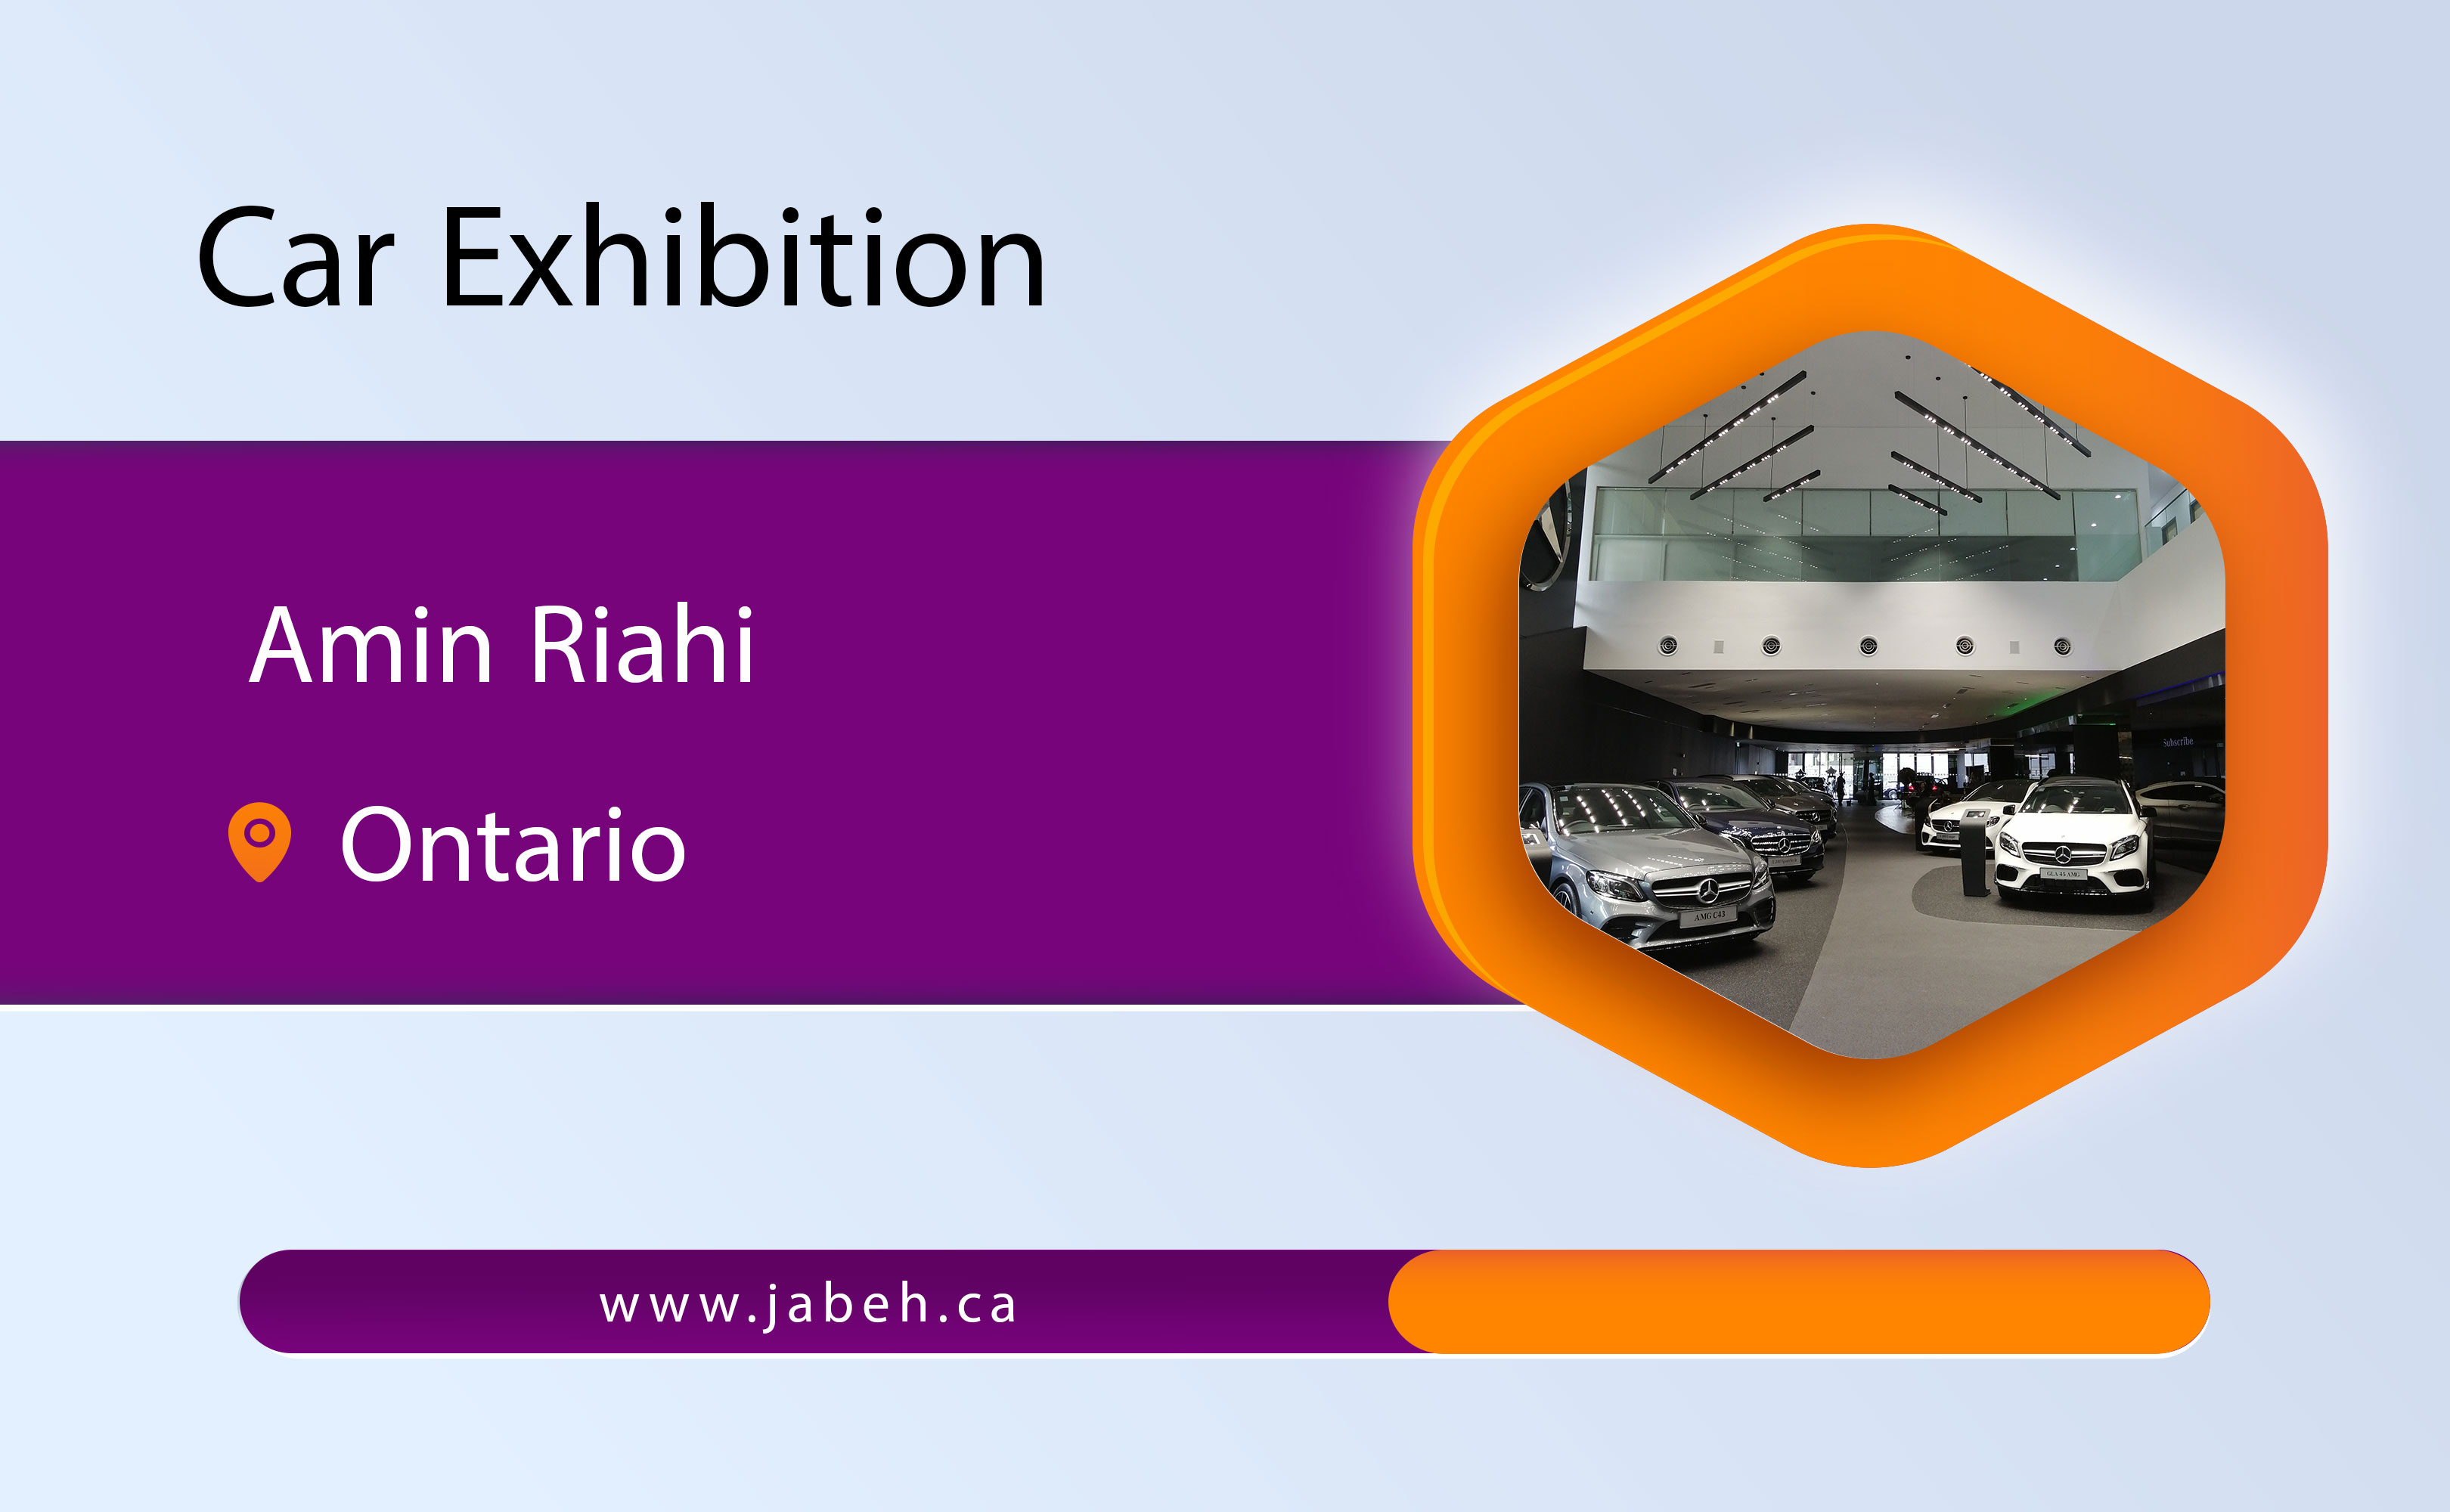 Amin Riahi car exhibition in Ontario